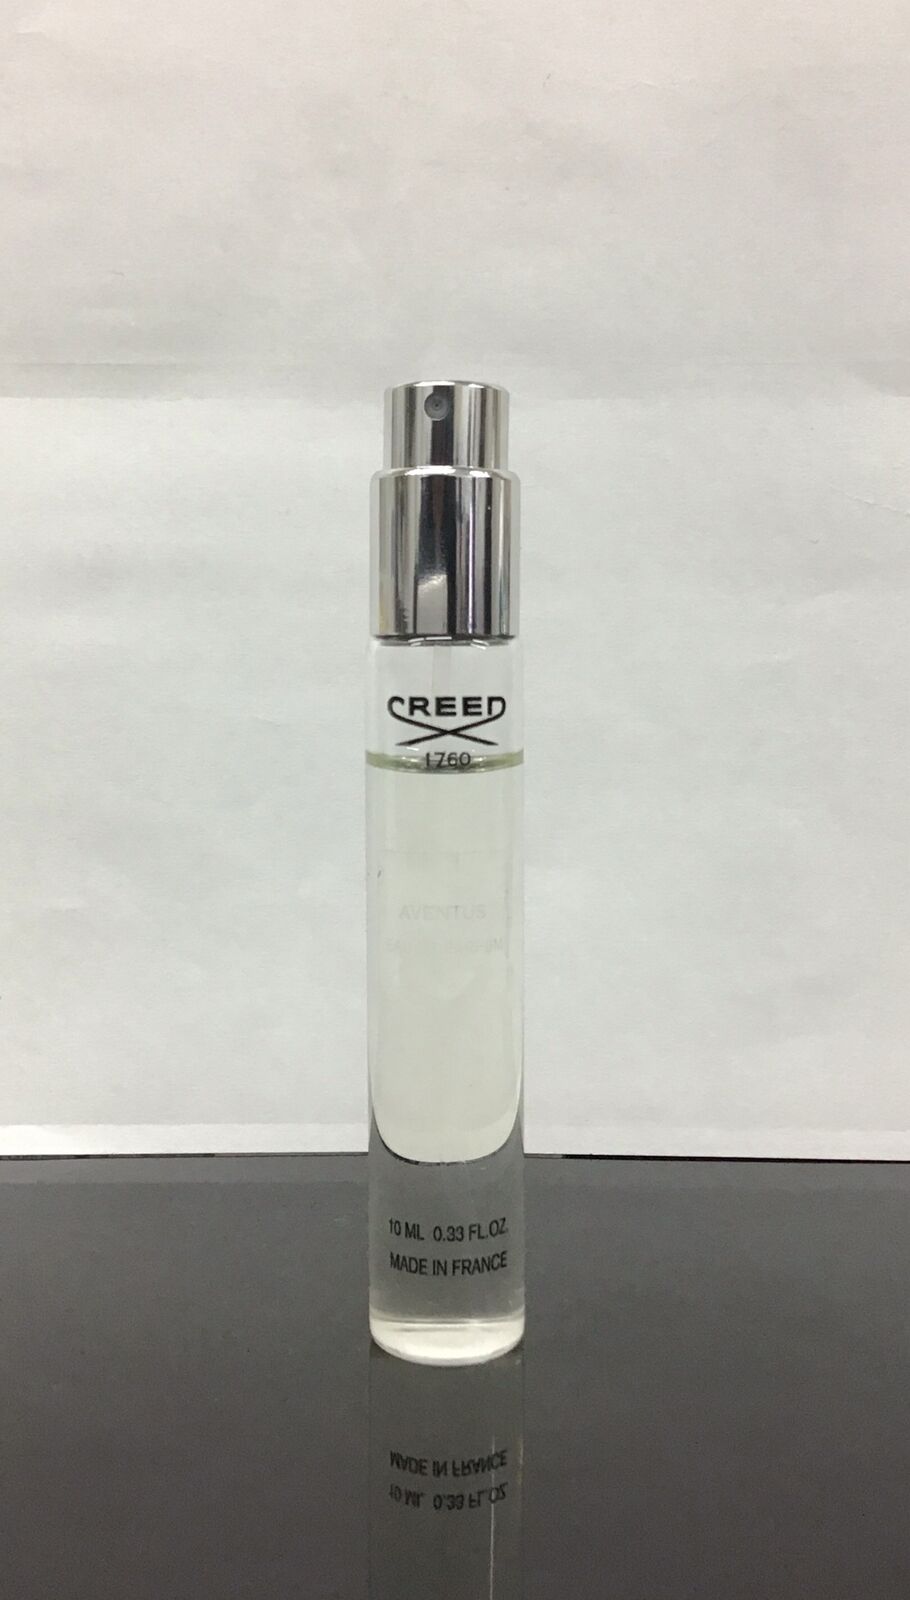 Creed Aventus Eau De Parfum Spray 0.33 Fl Oz, As Pictured, No Box 